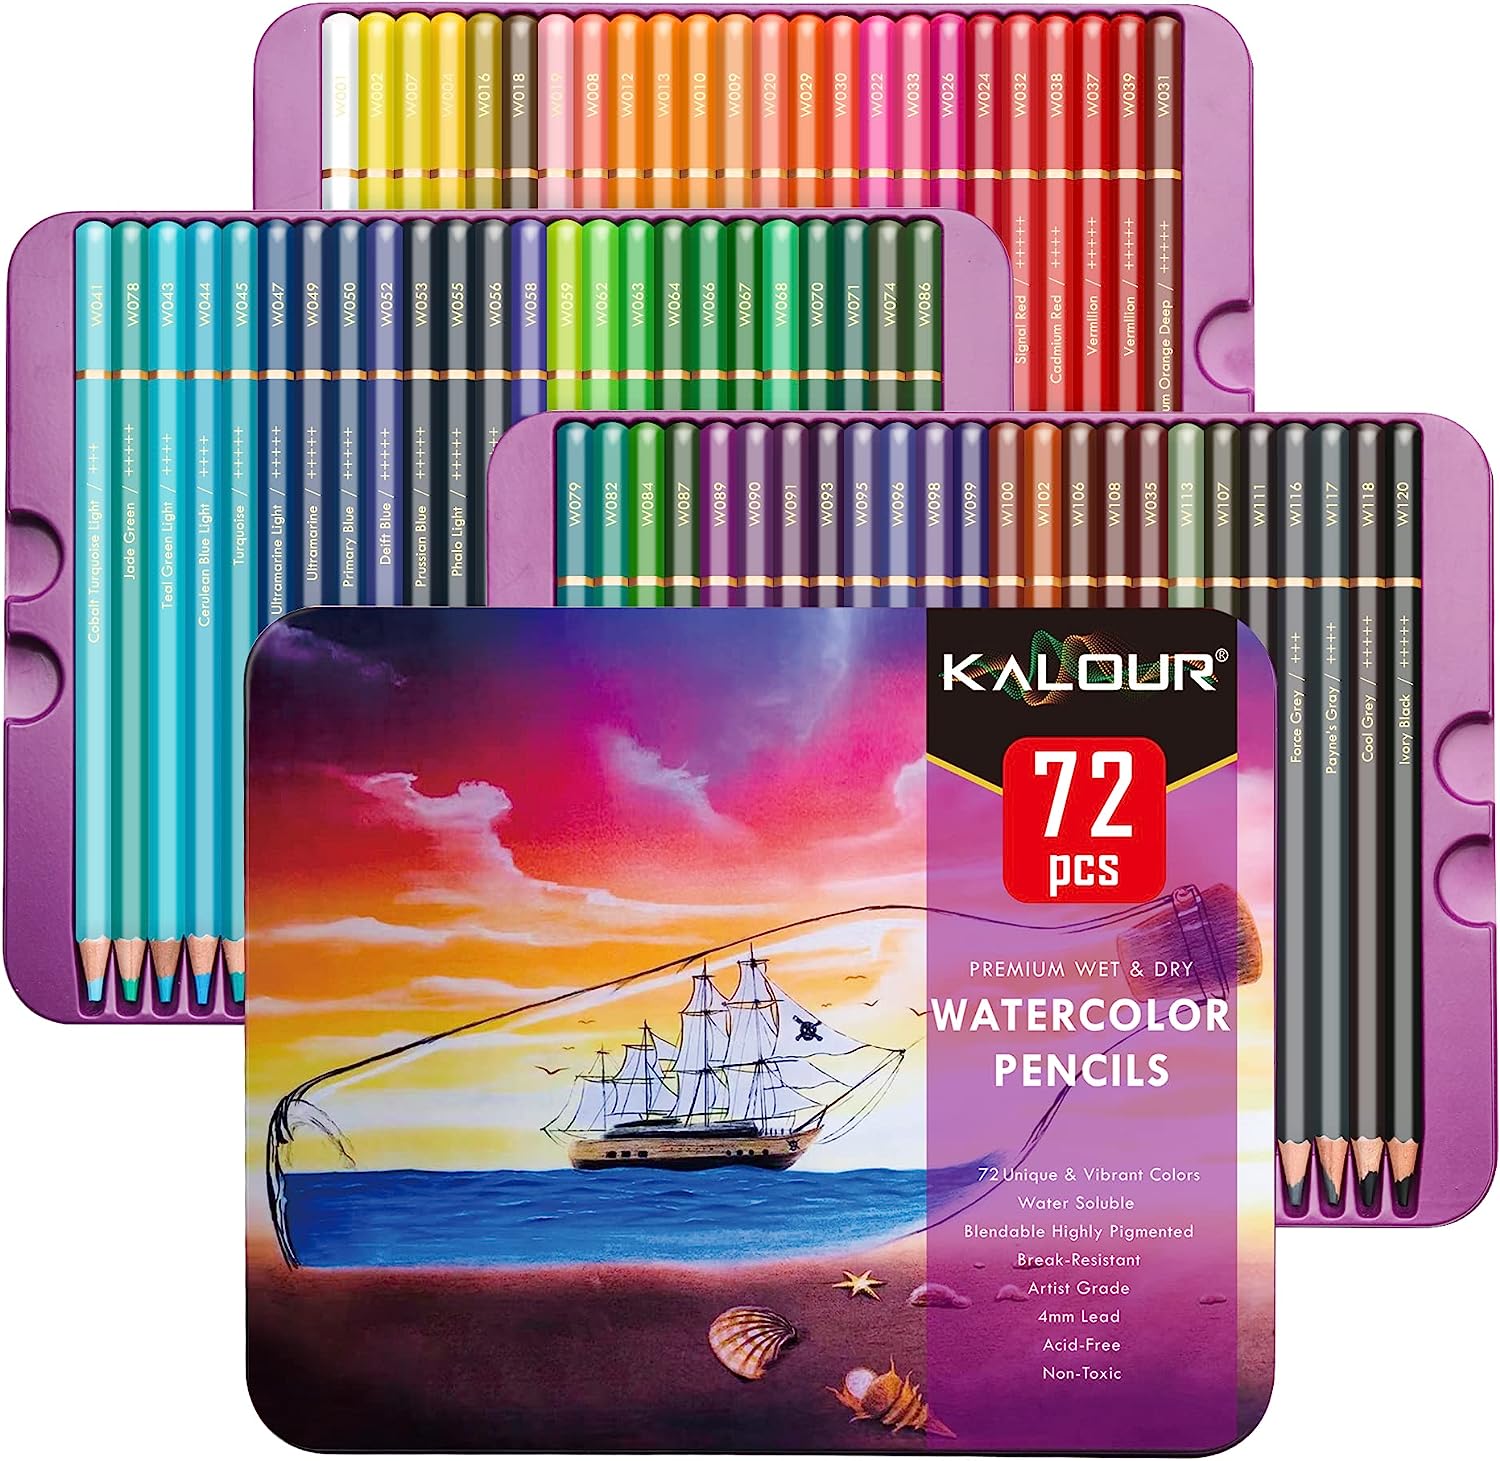 KALOUR Premium Watercolor Pencils, Set of 120 Colors,With Water